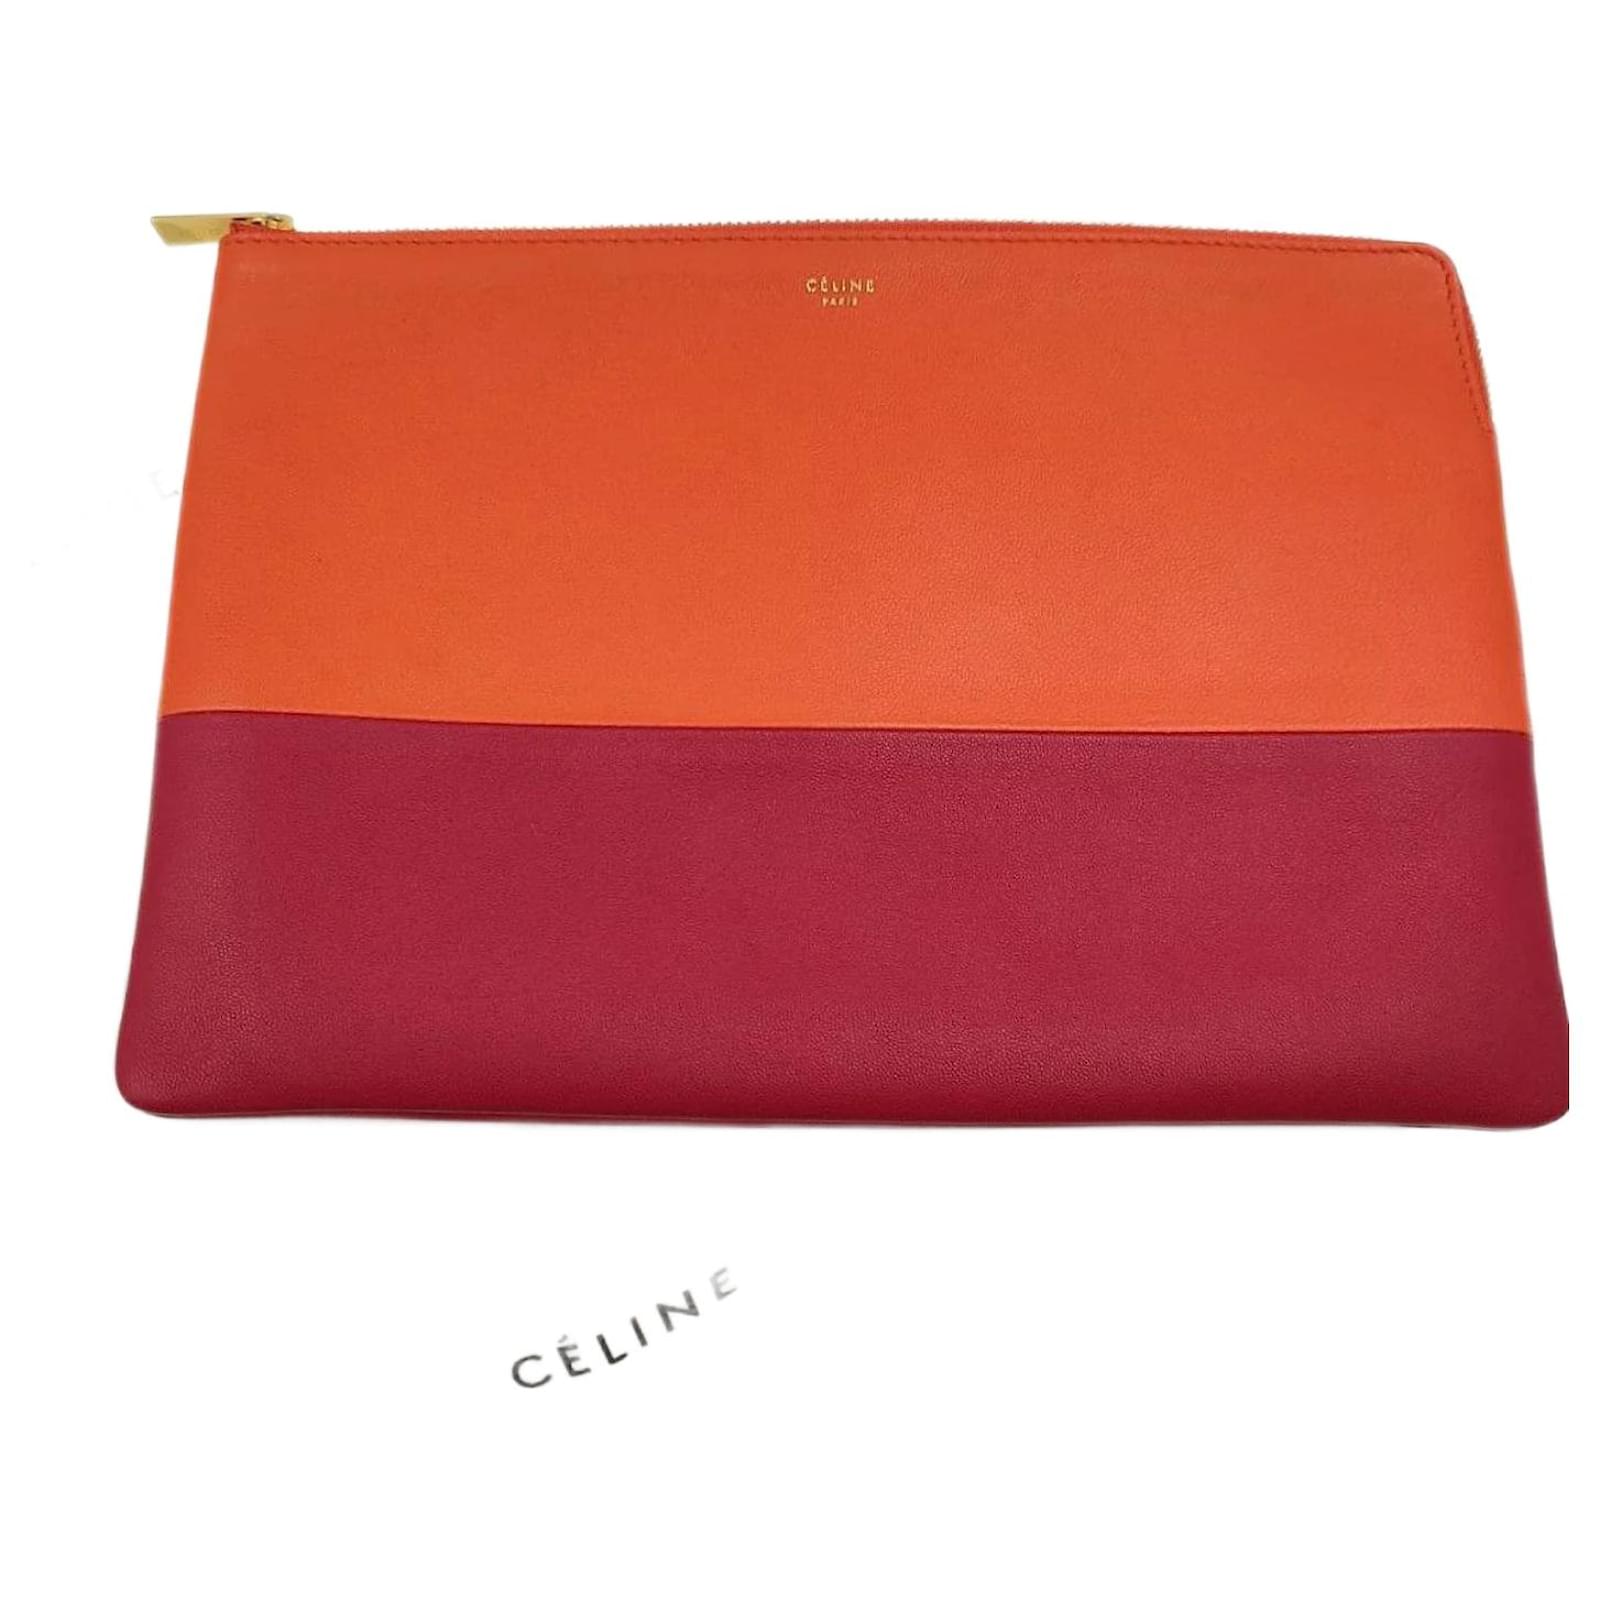 Céline Céline pochette in two-tone orange and burgundy leather